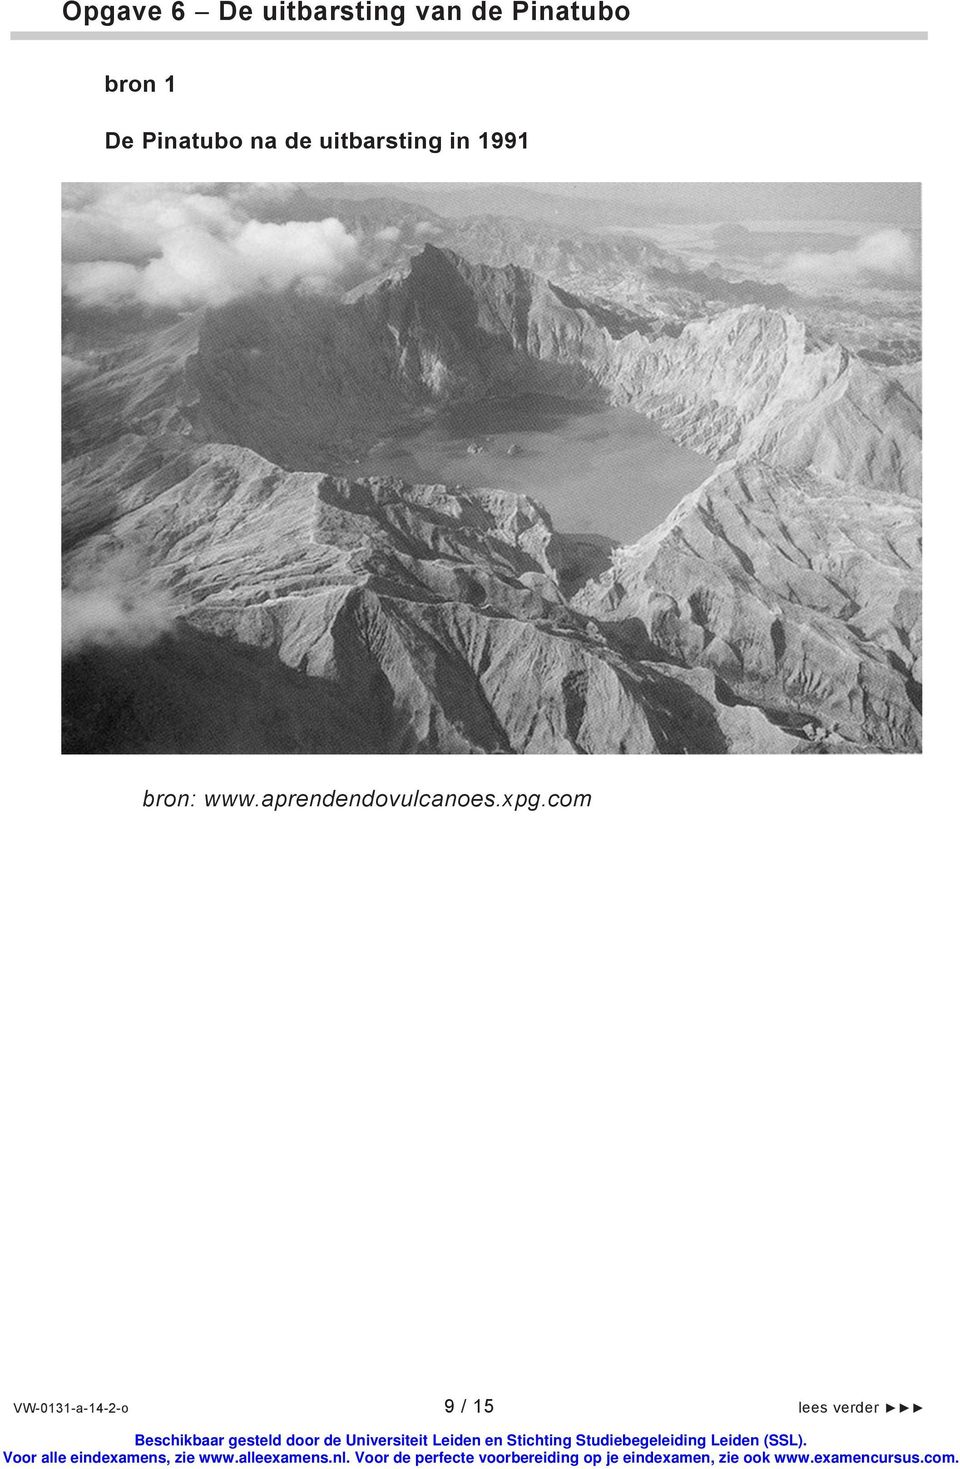 uitbarsting in 1991 bron: www.